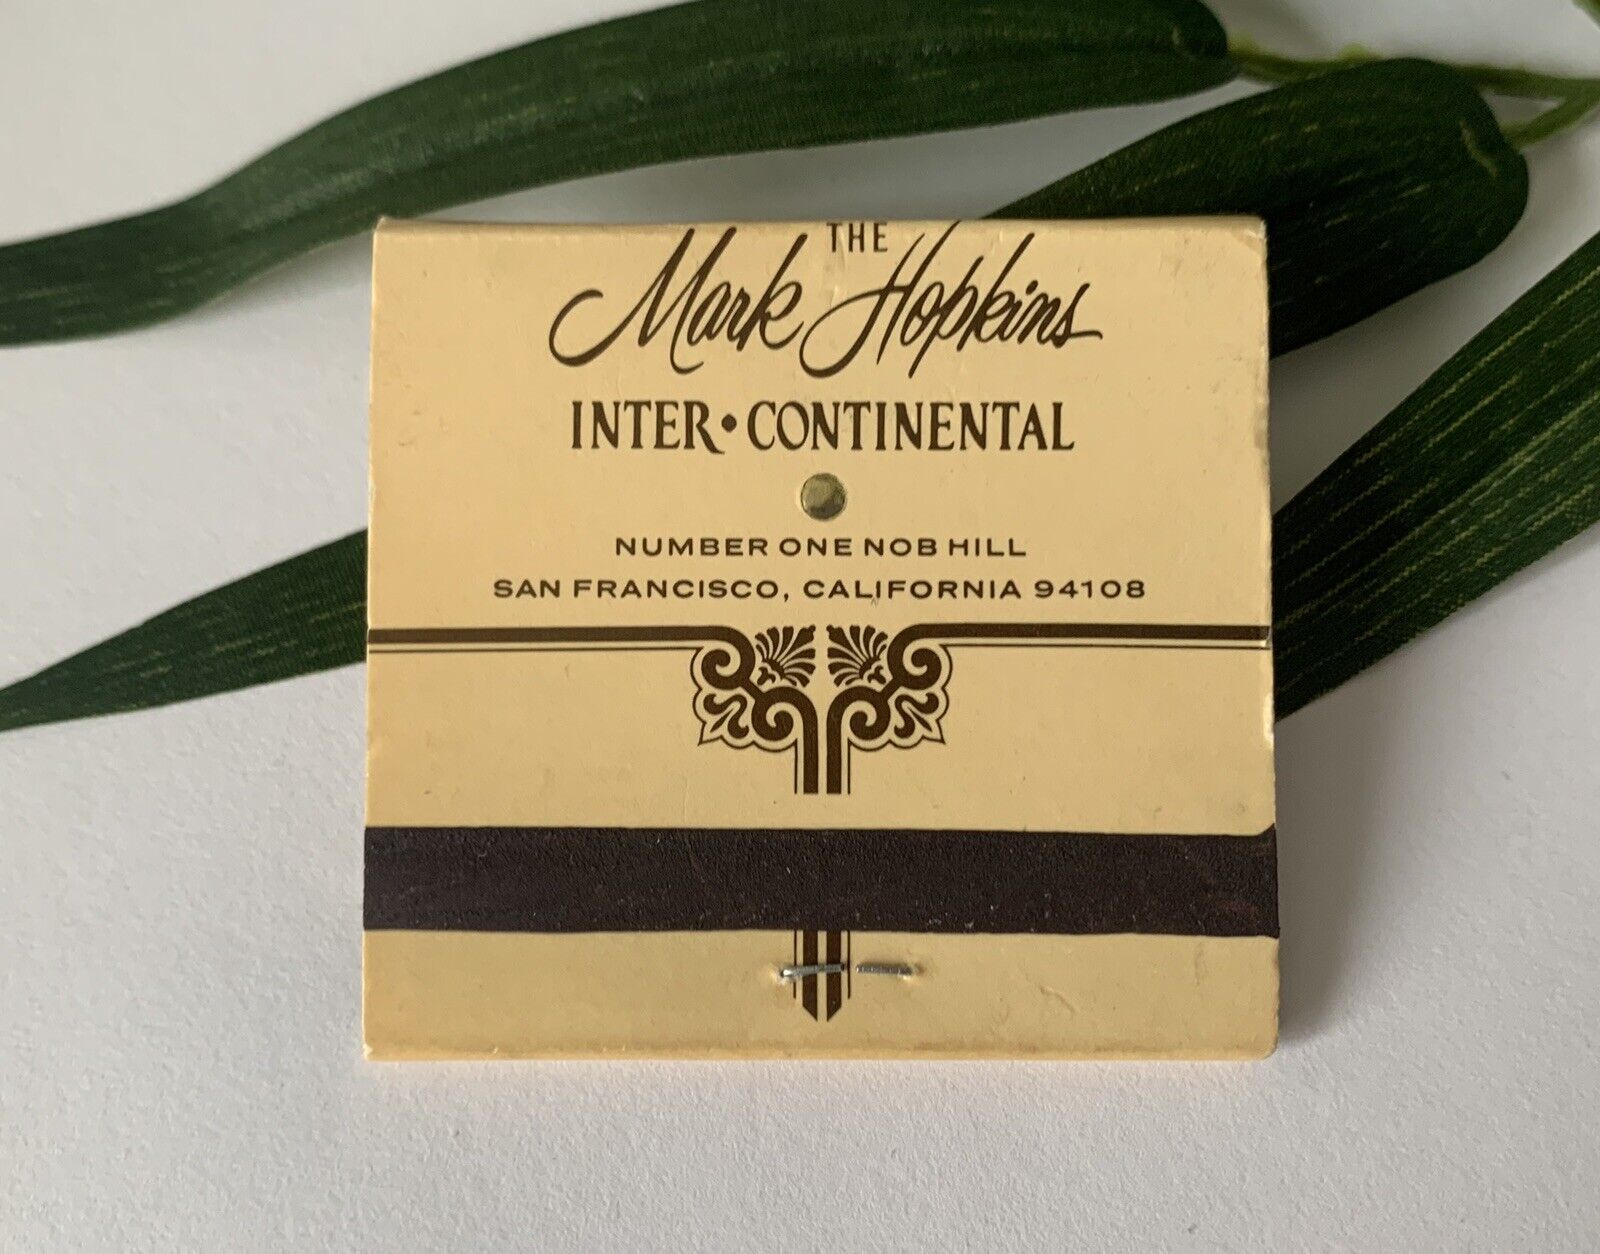 InterContinental Hotel Matchbook Nob Hill San Francisco Mark Hopkins Full ~